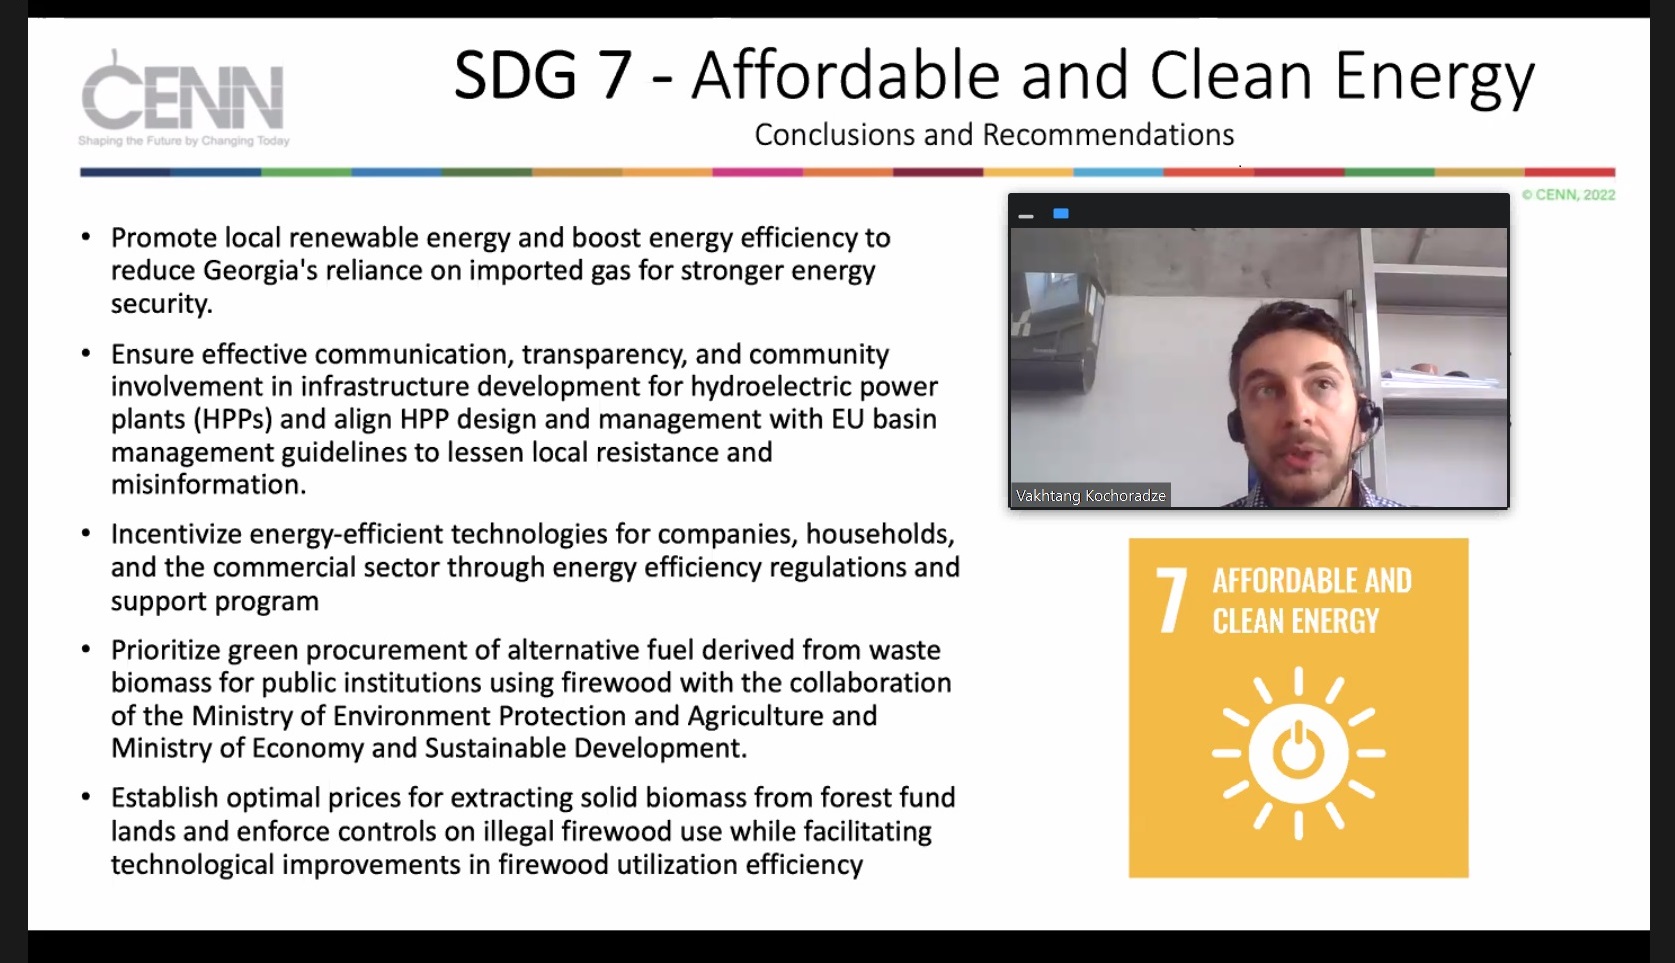 CENN-მა SDG 6-სა და SDG 7-ზე საქართველოს წინსვლა და გამოწვევები წარადგინა